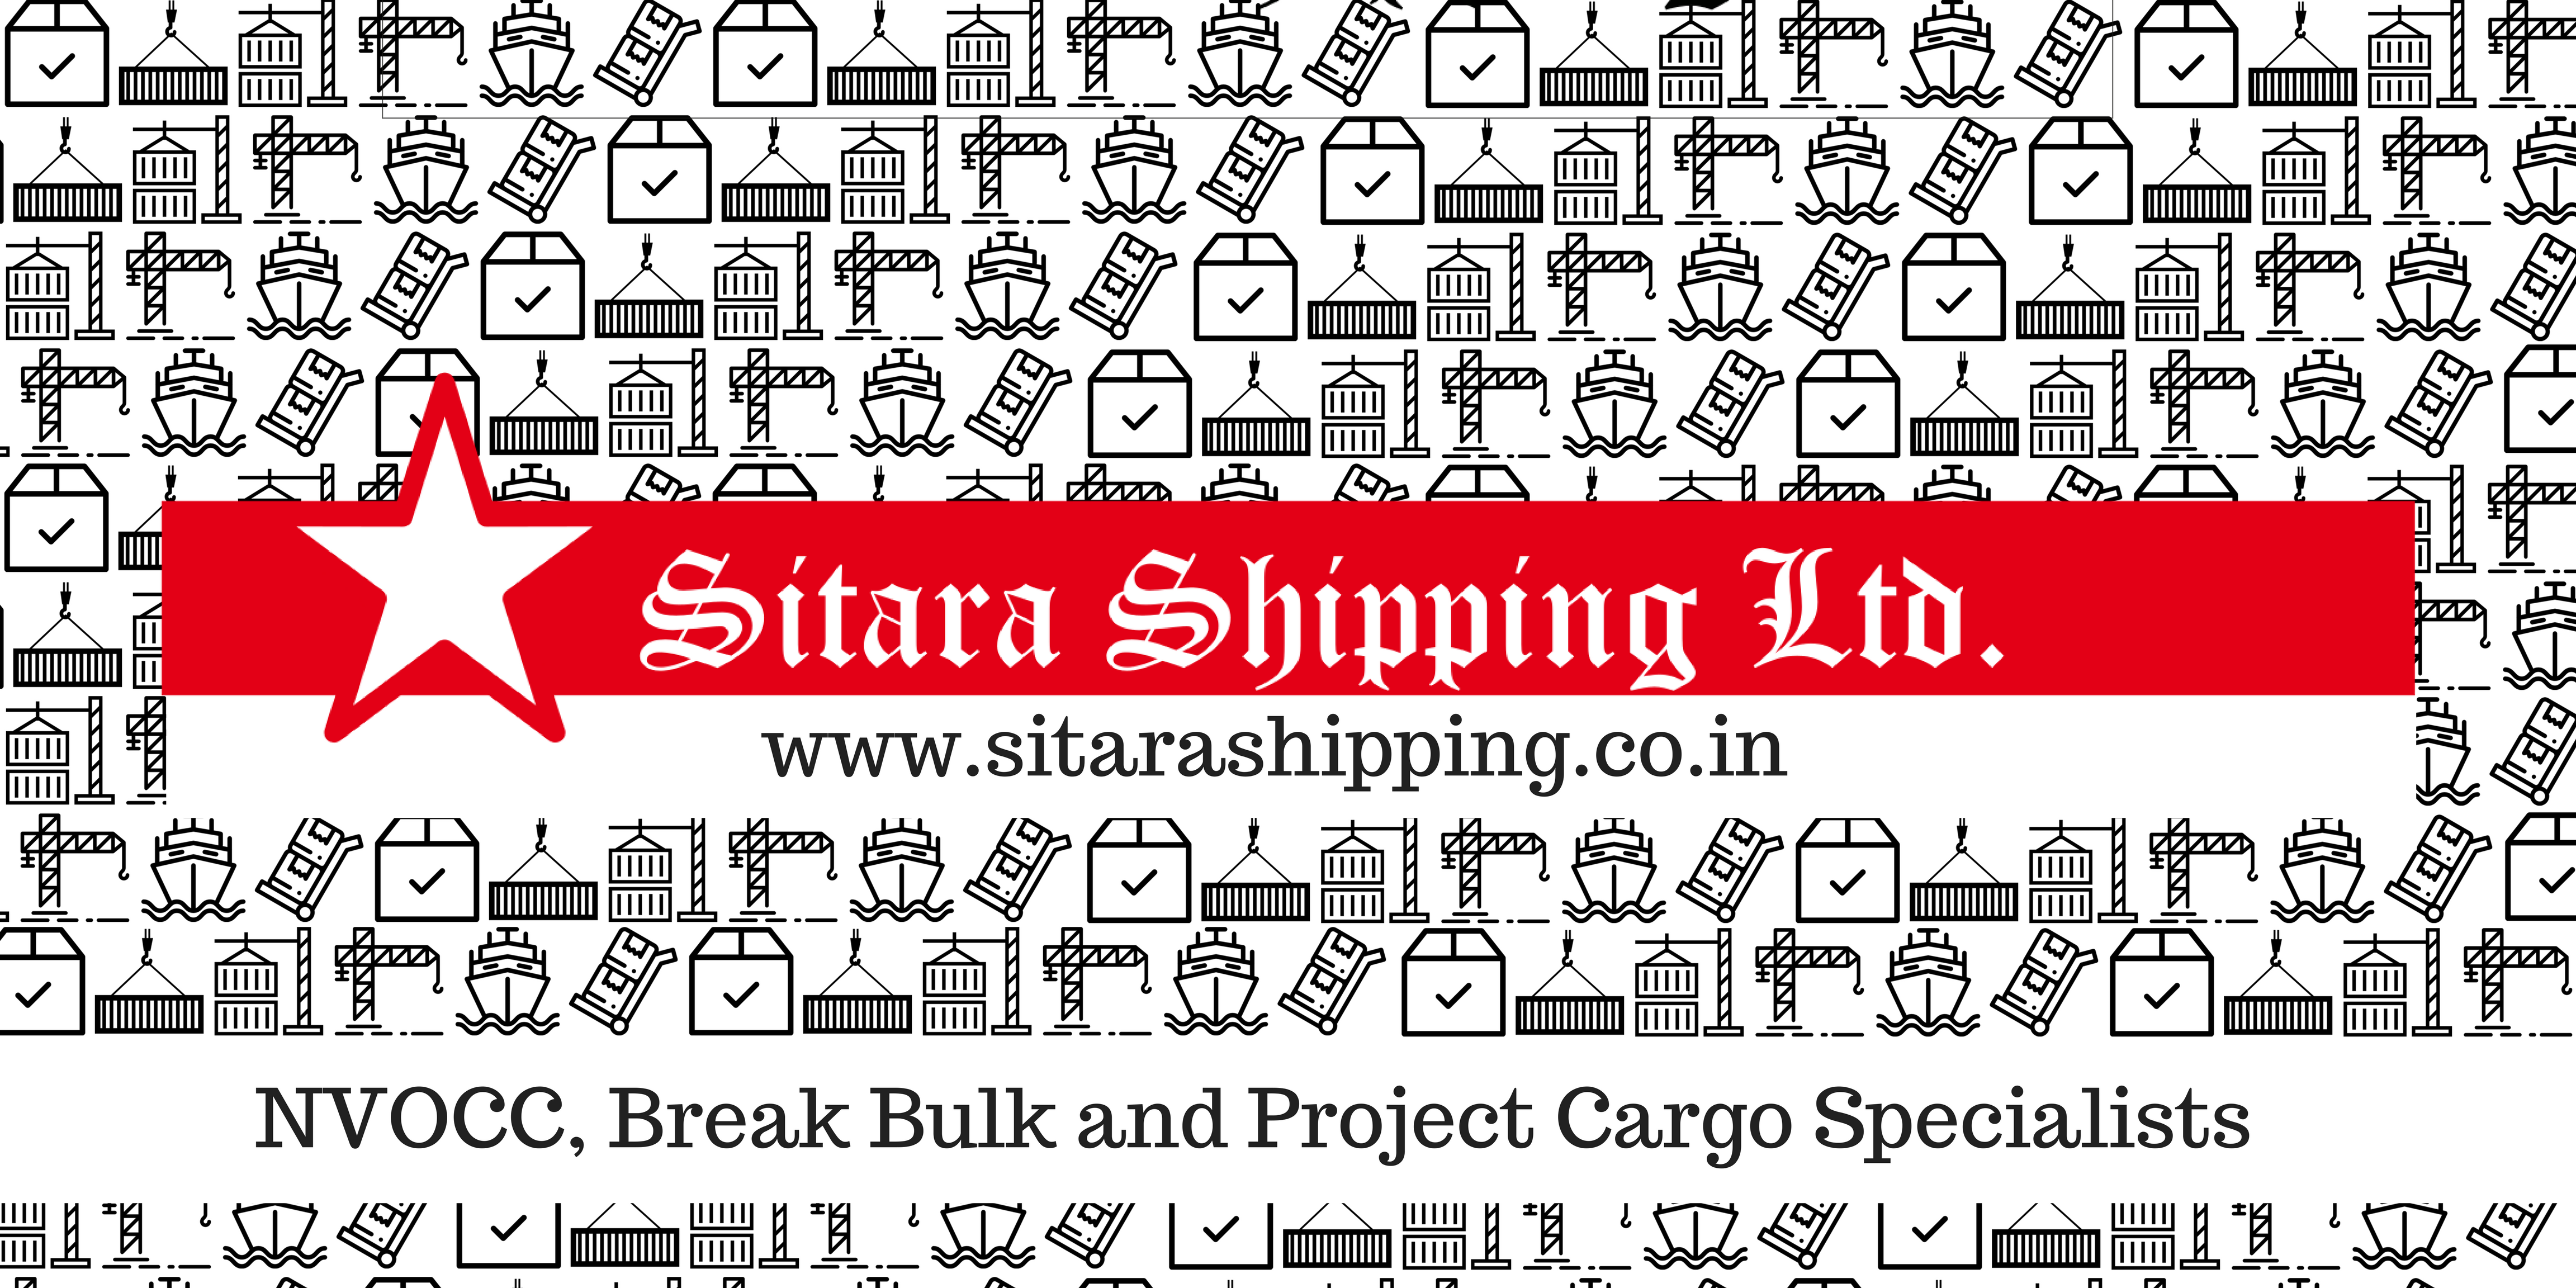 Sitara Shipping Ltd.